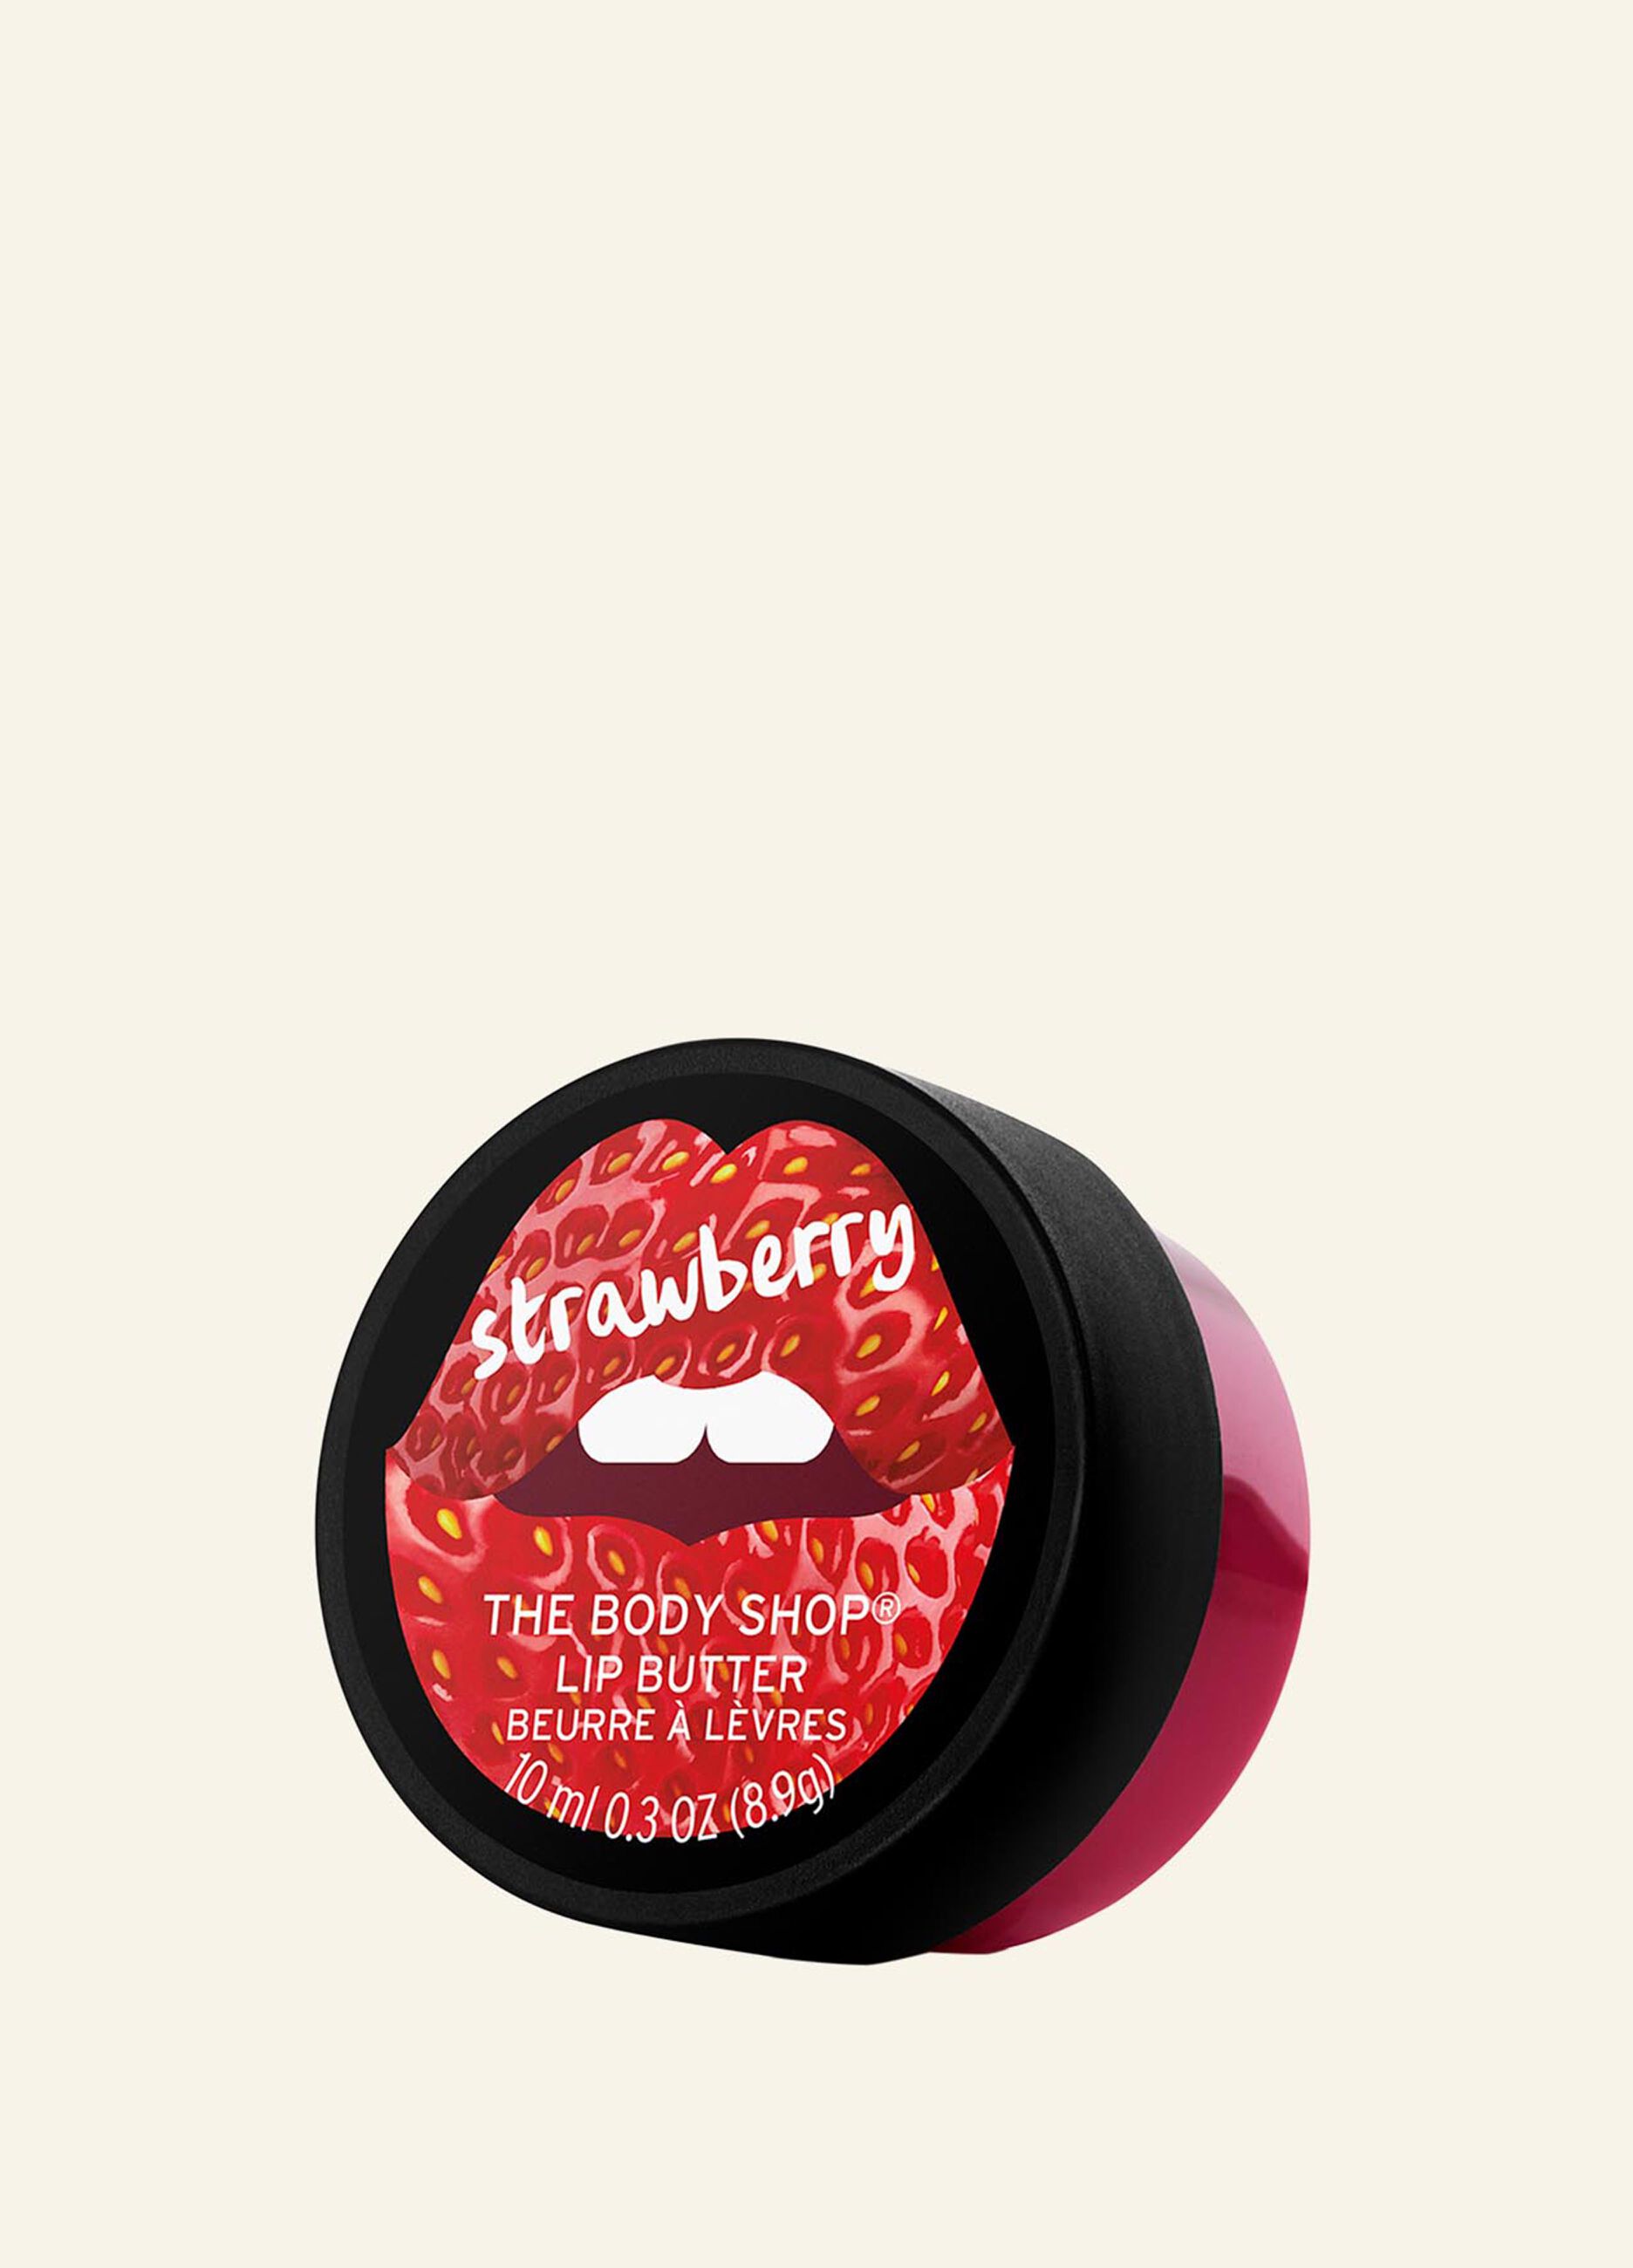 The Body Shop strawberry lip balm